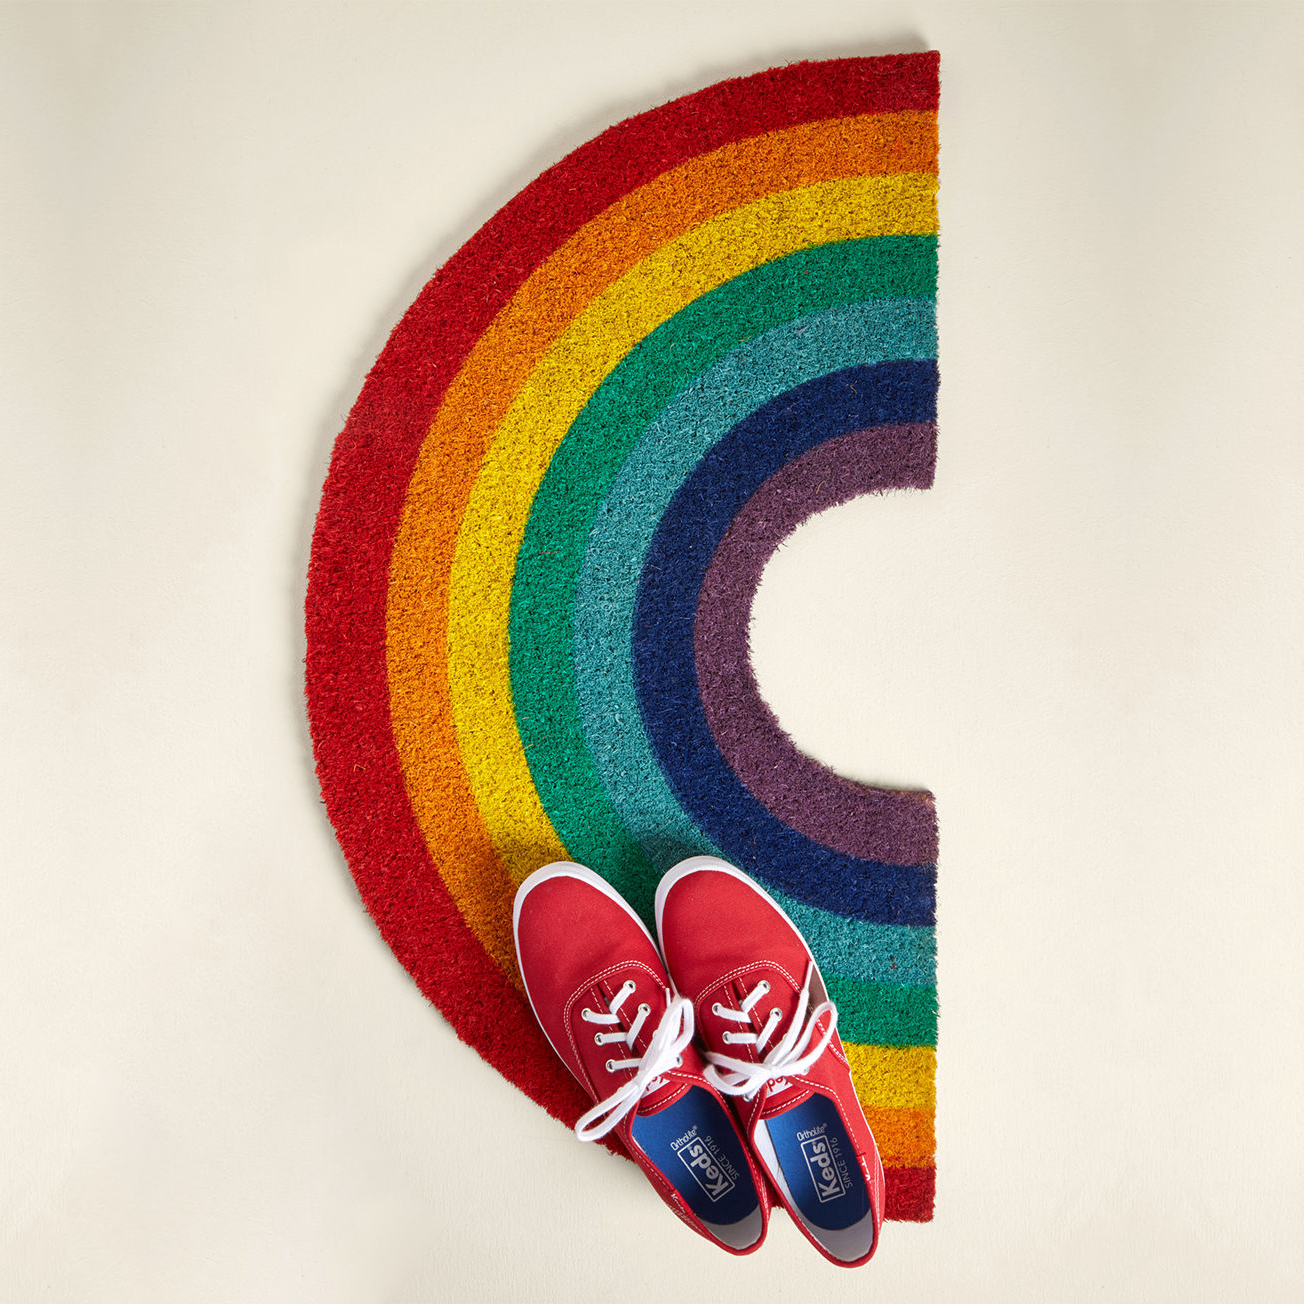 Chase the Rainbow Doormat, $36